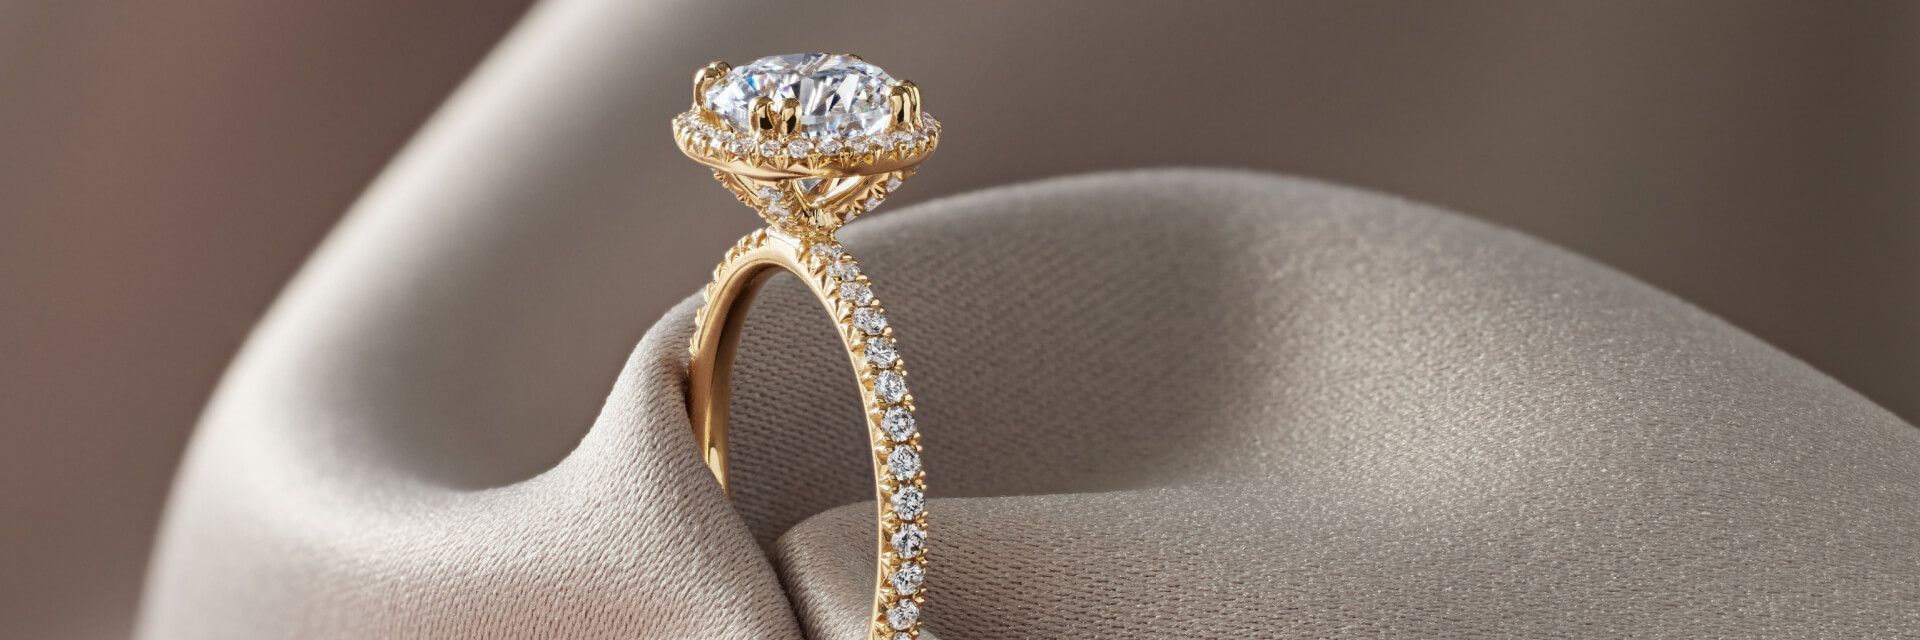 Customise Wedding Rings online